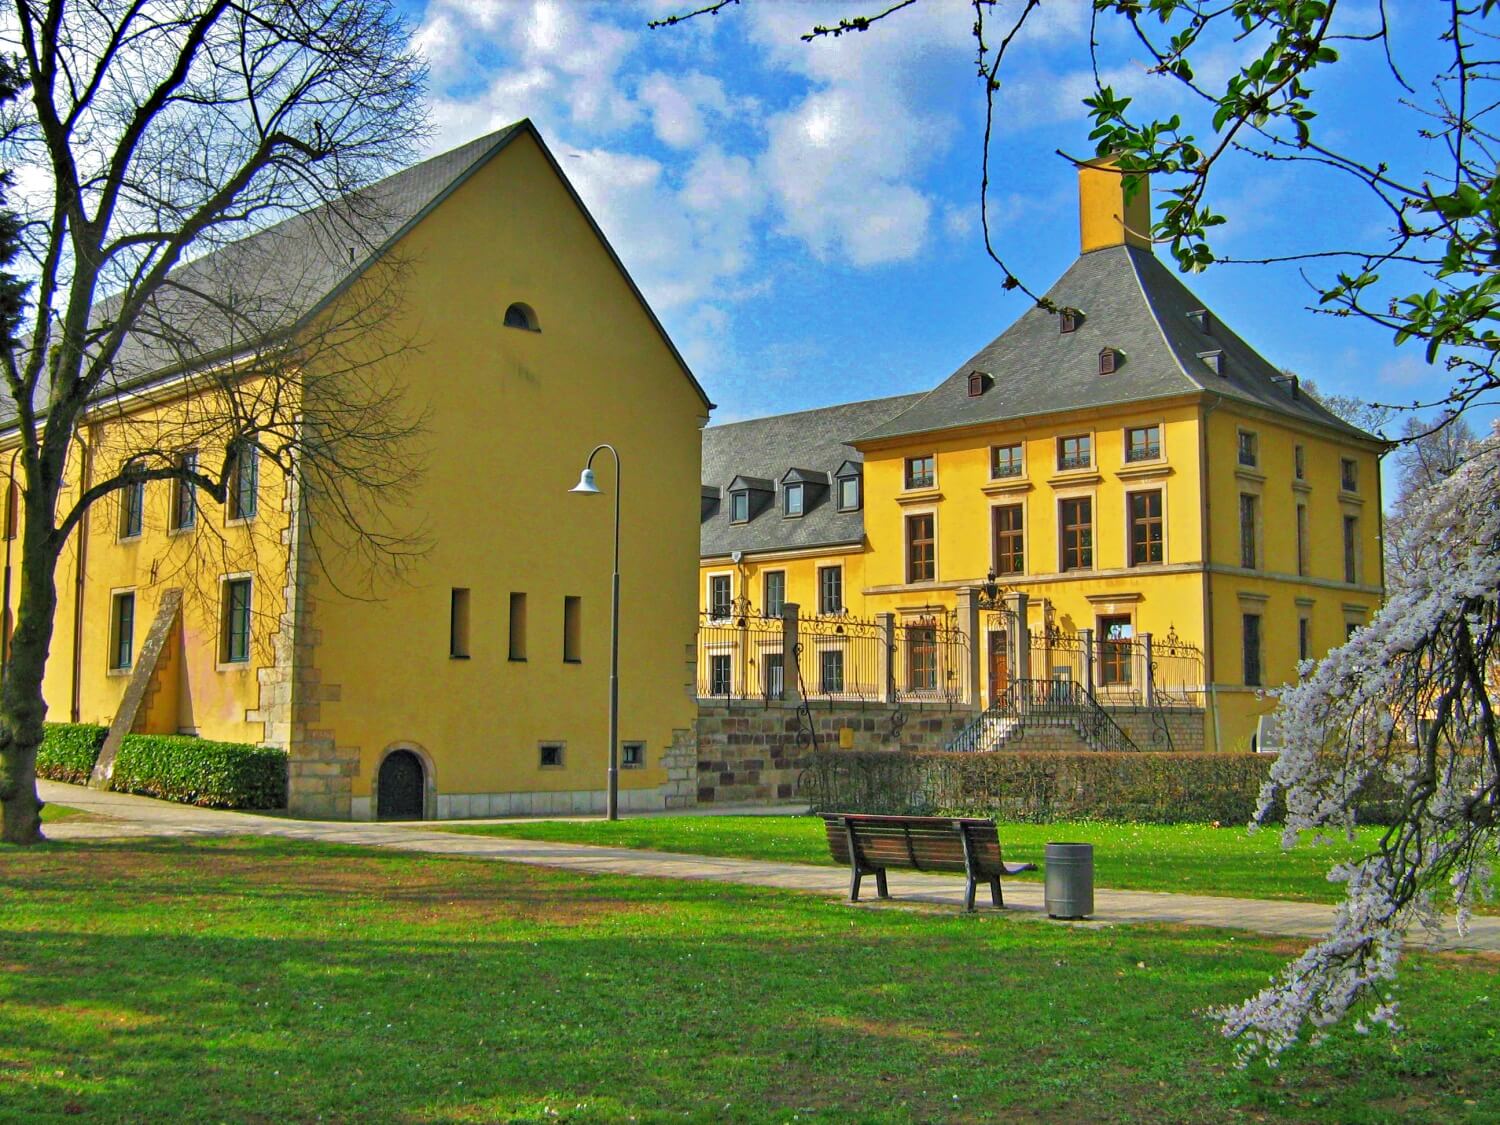 Bettembourg Castle